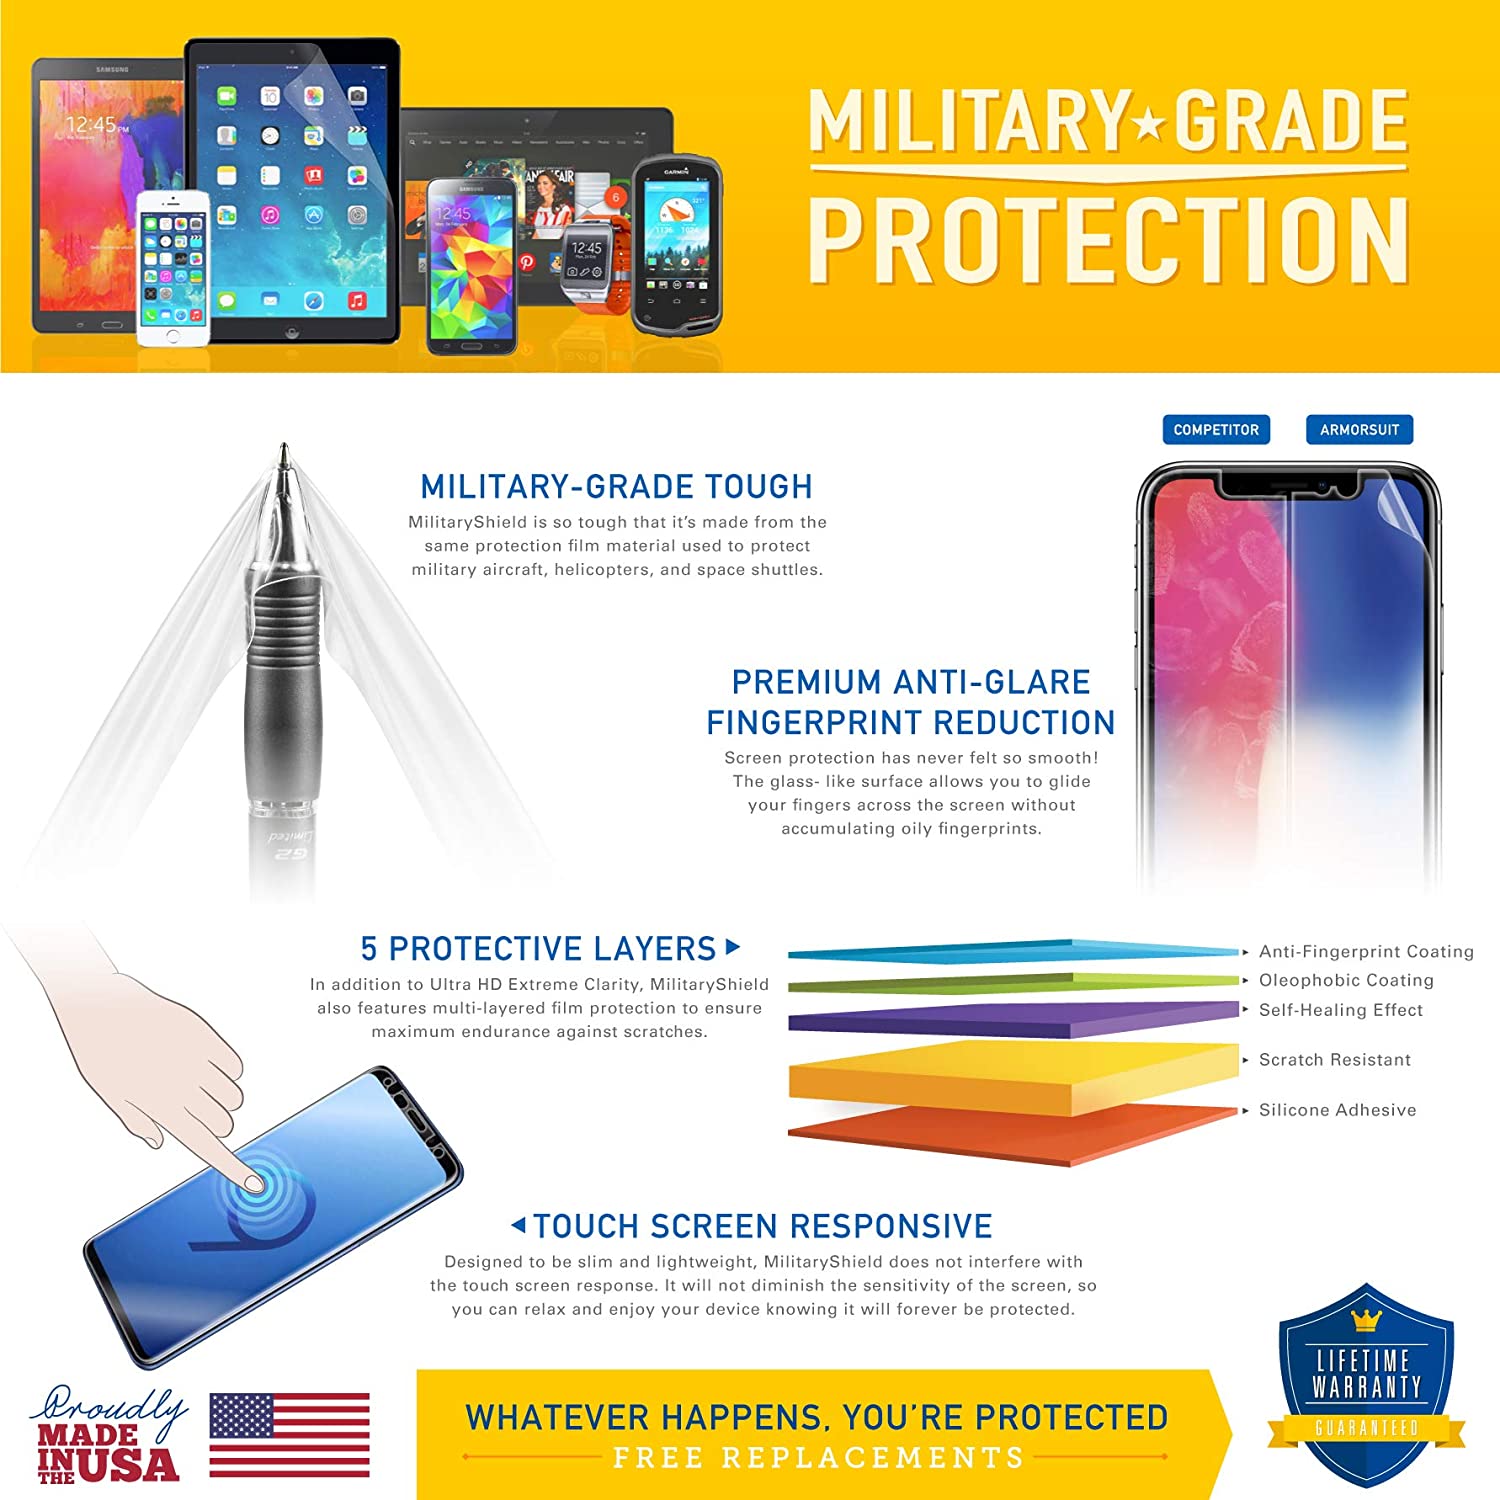 [2 Pack] Nokia Lumia 822 Screen Protector